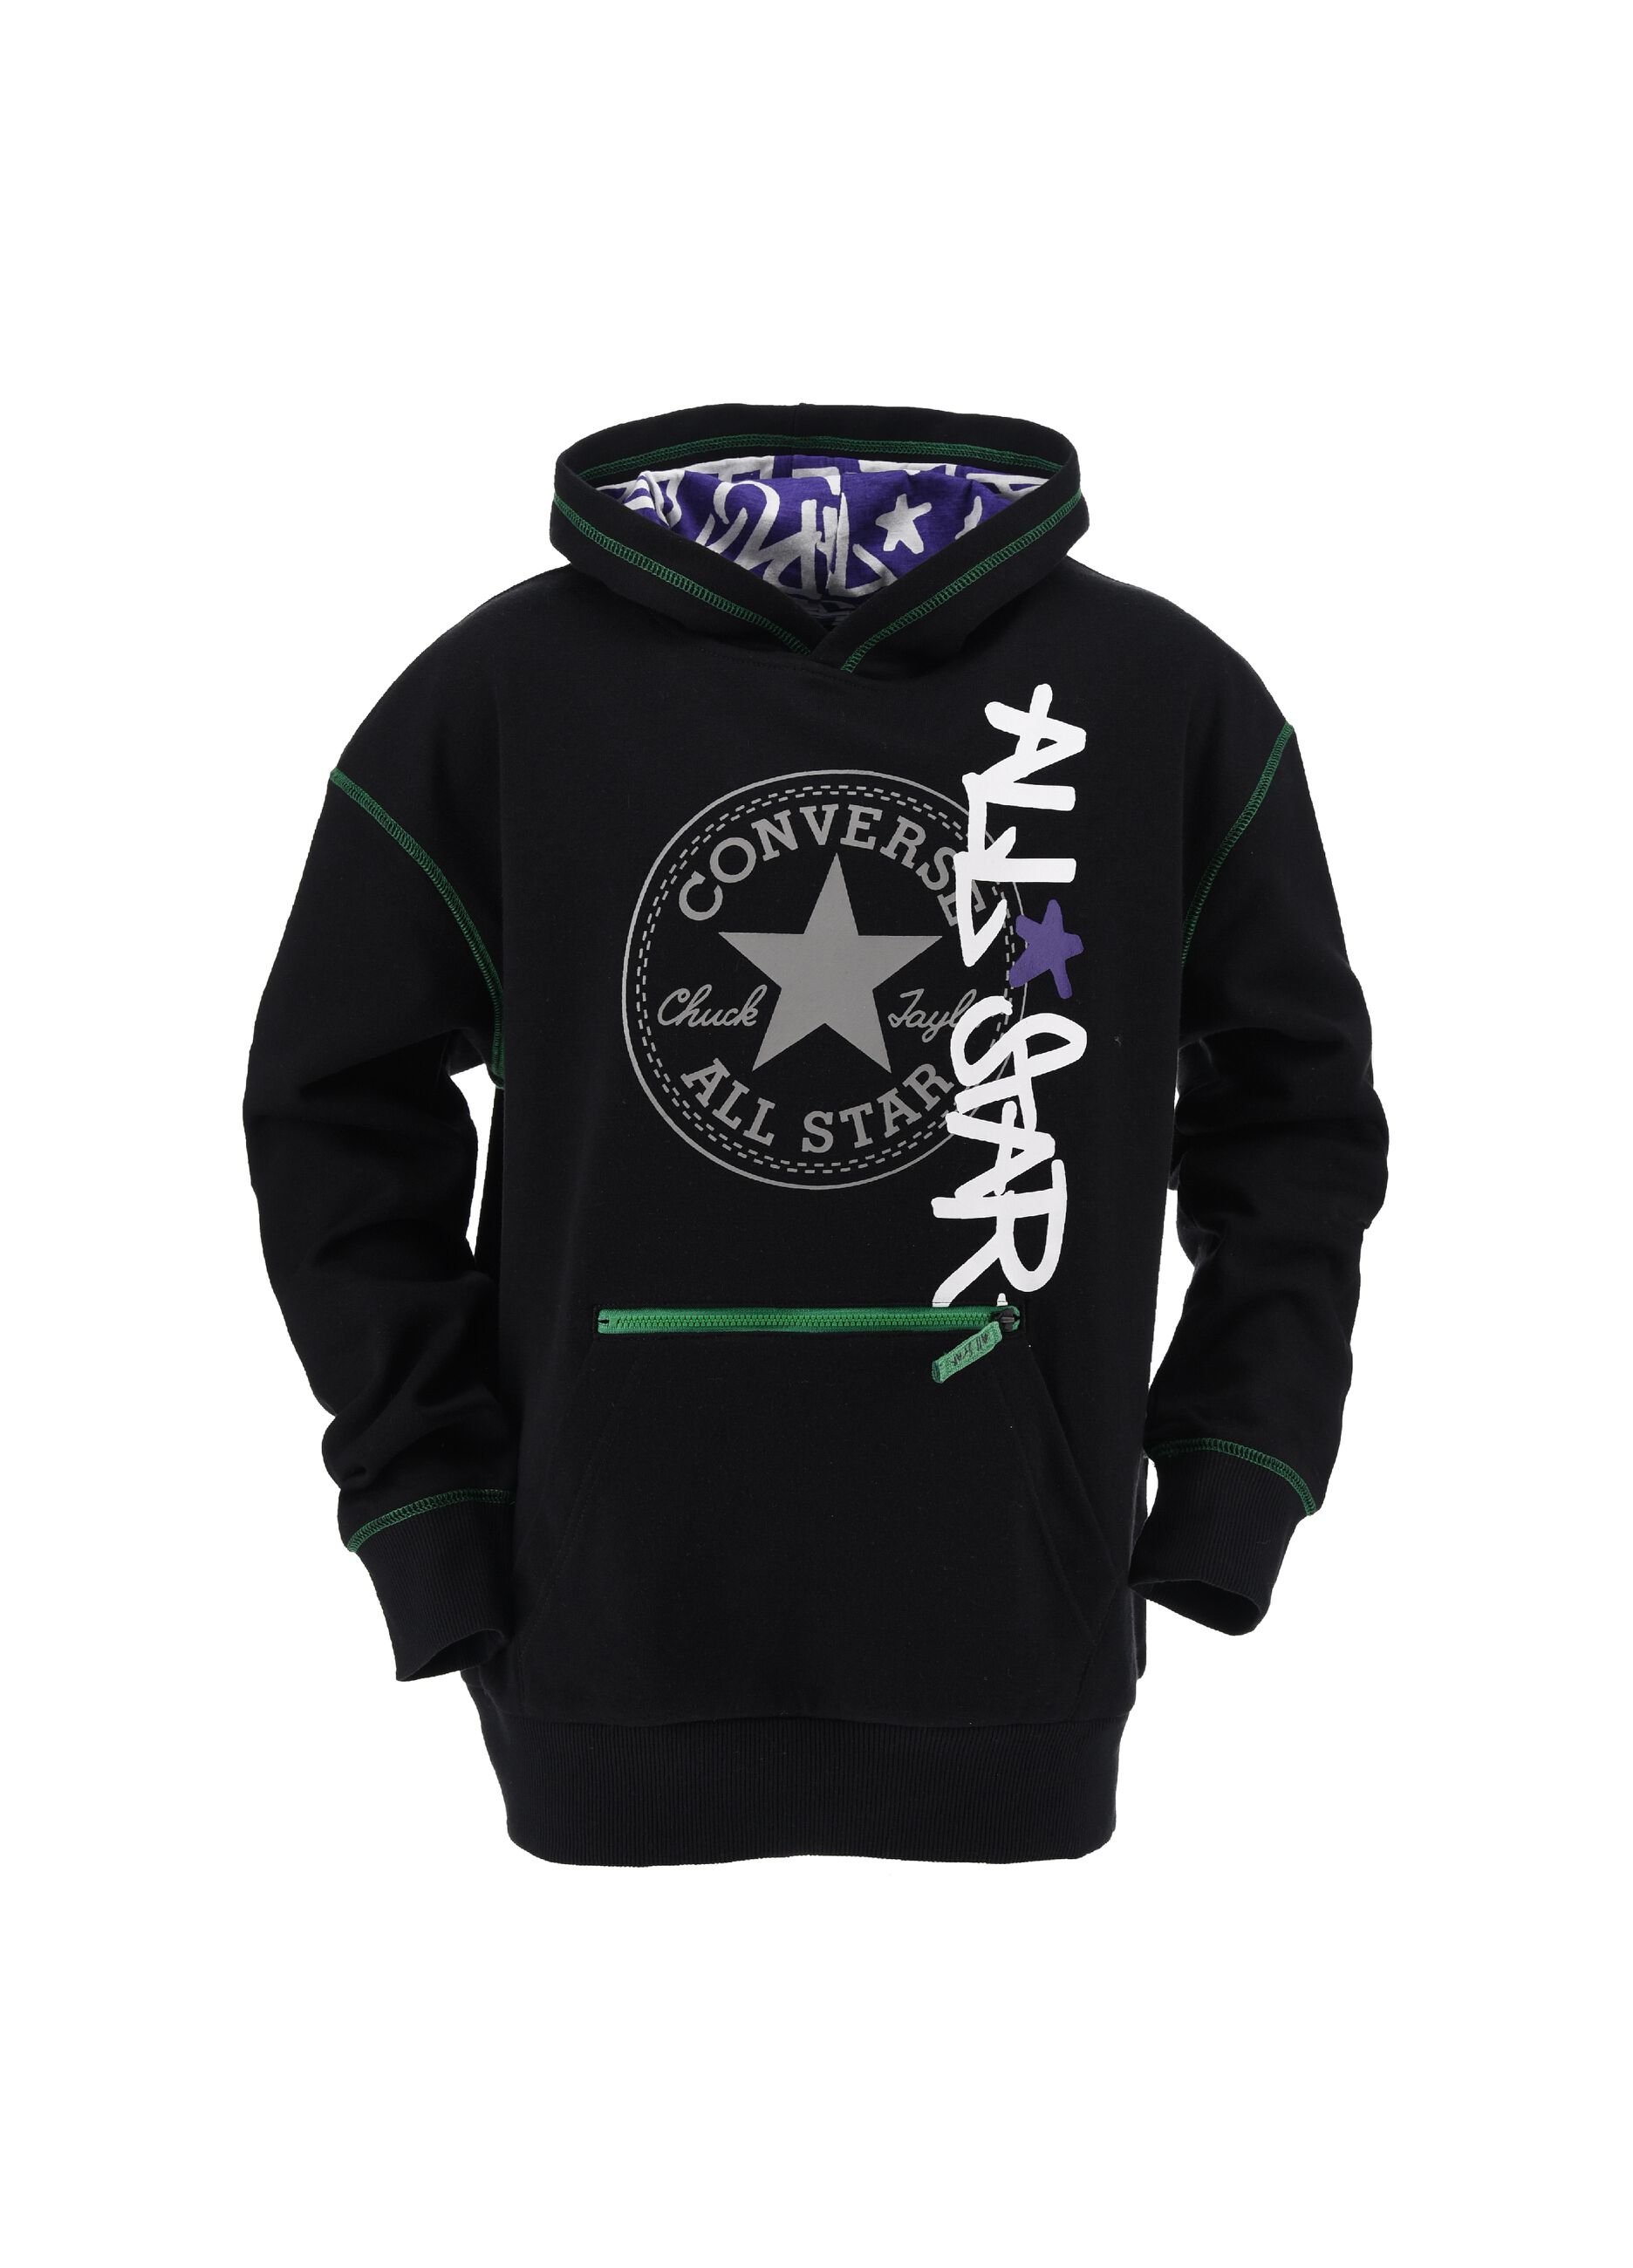 All Star Graffiti sweatshirt with zip pocket